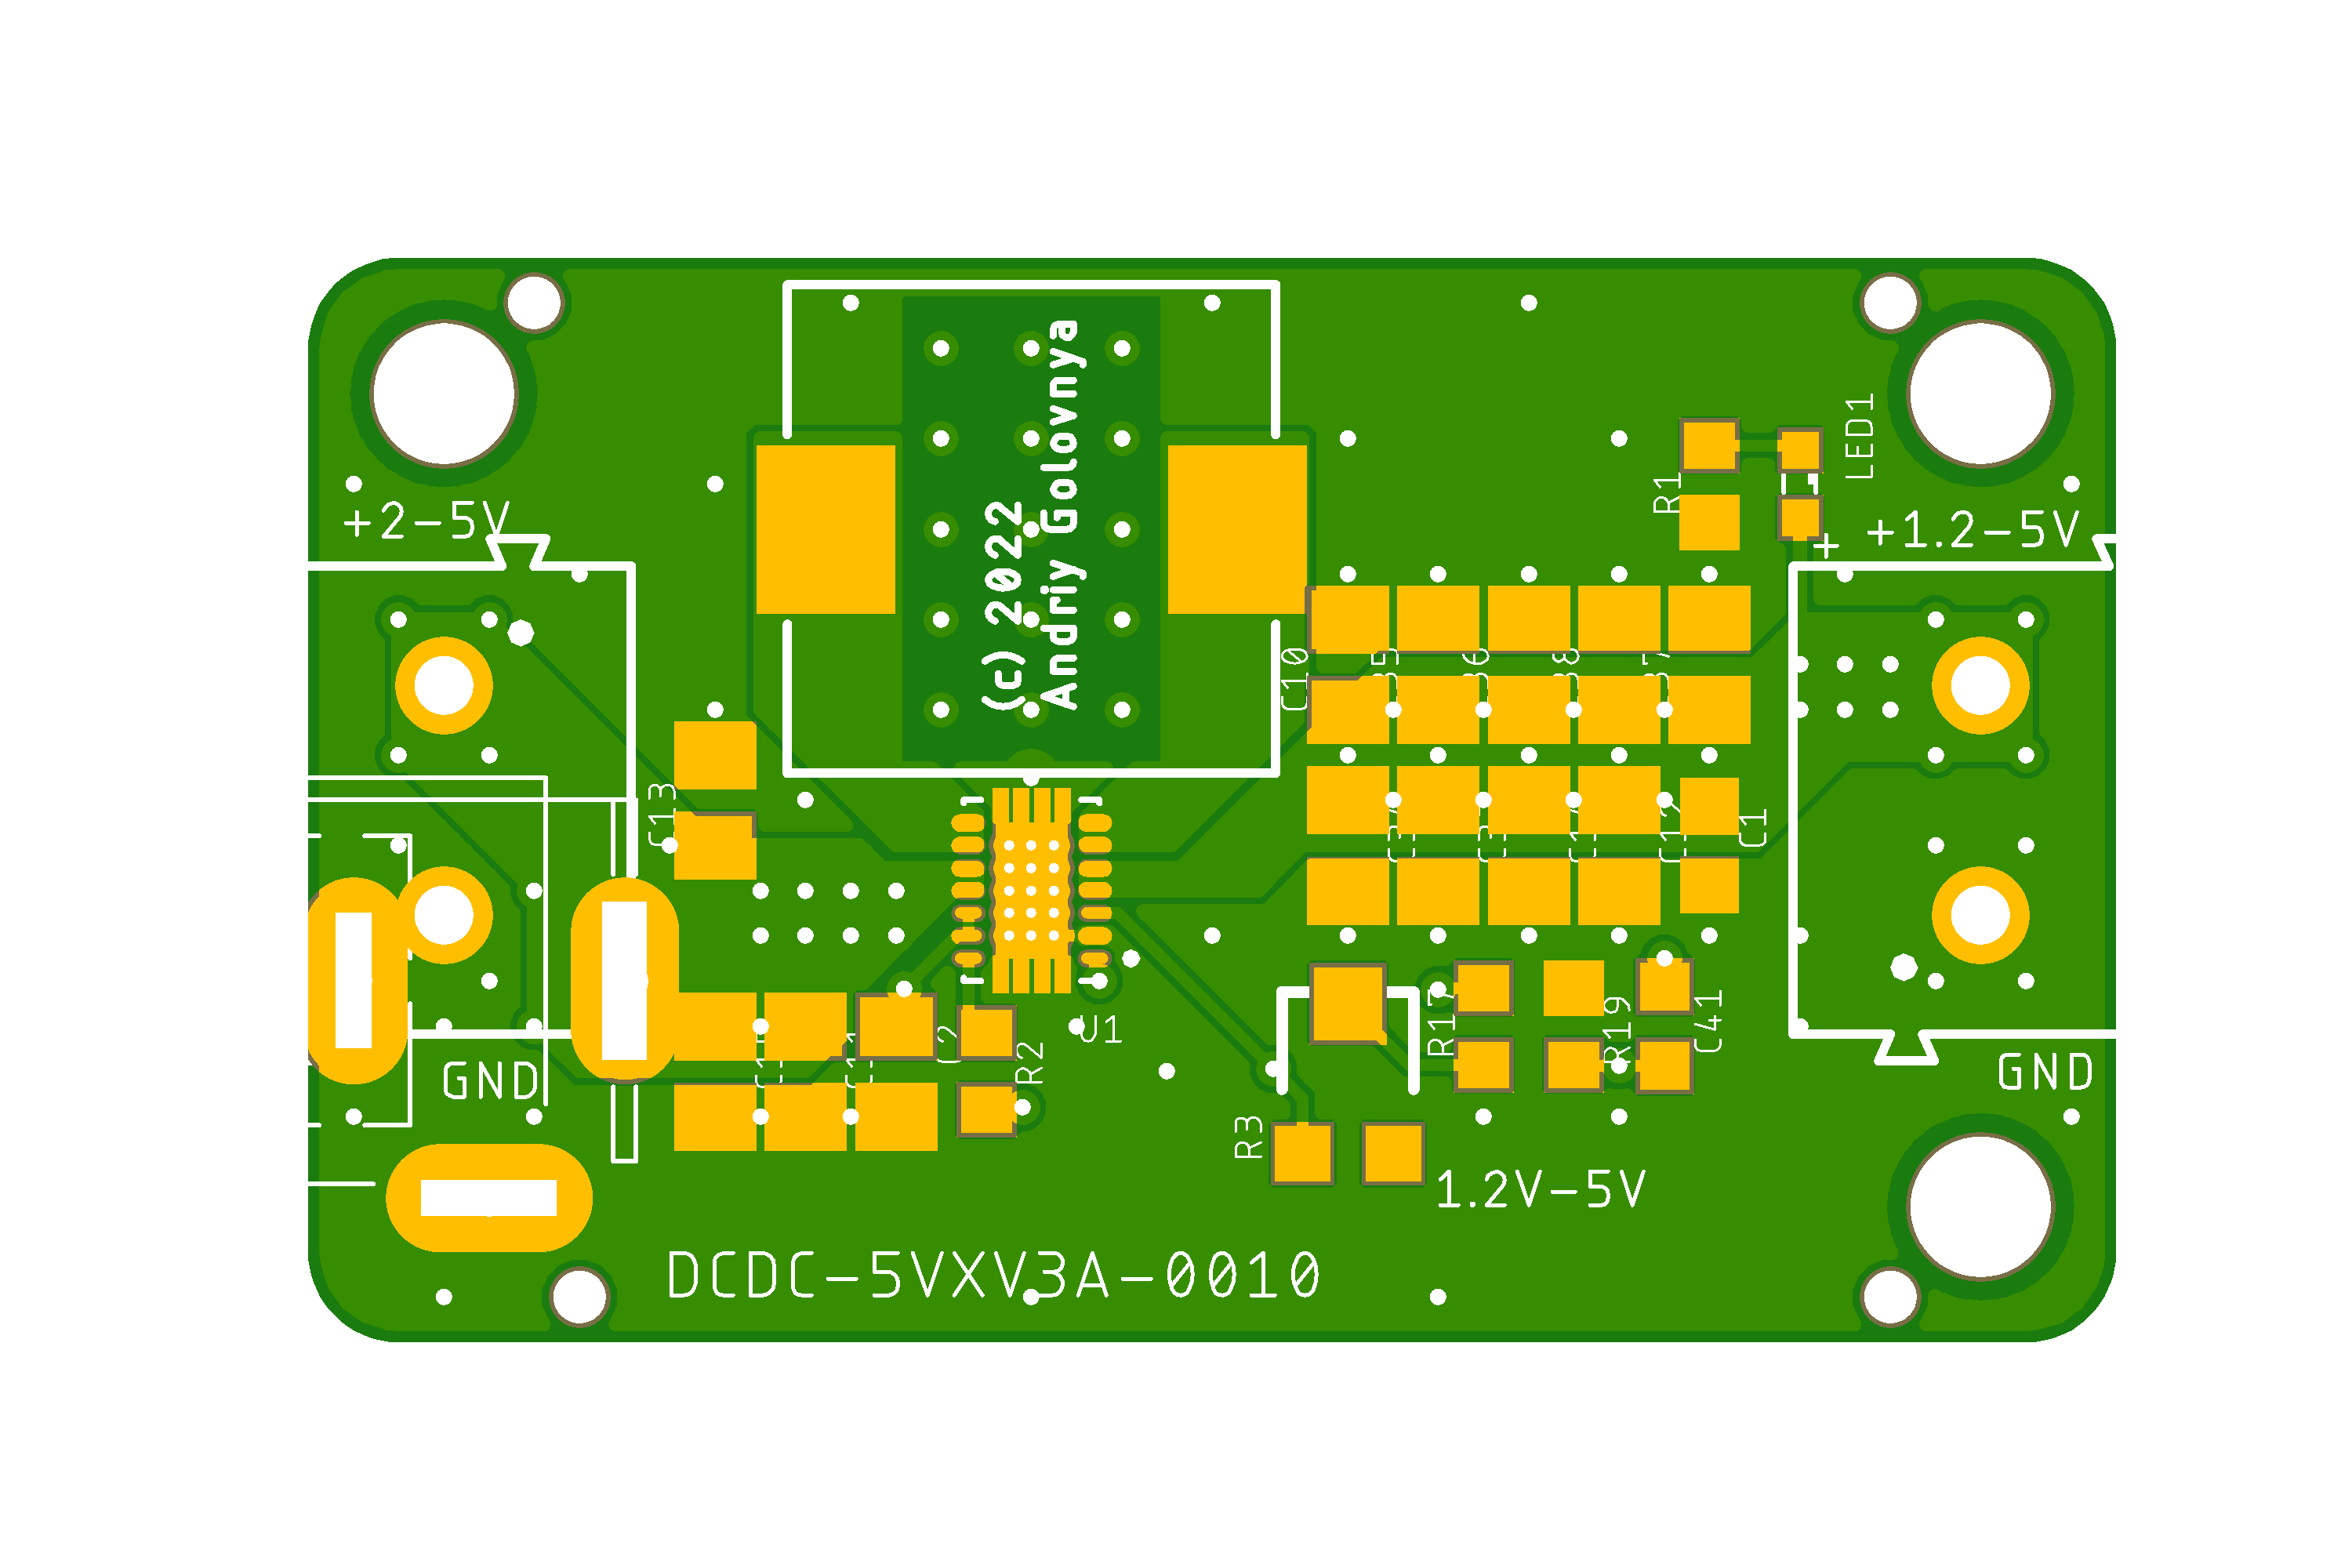 DCDC-5VXV3A preview